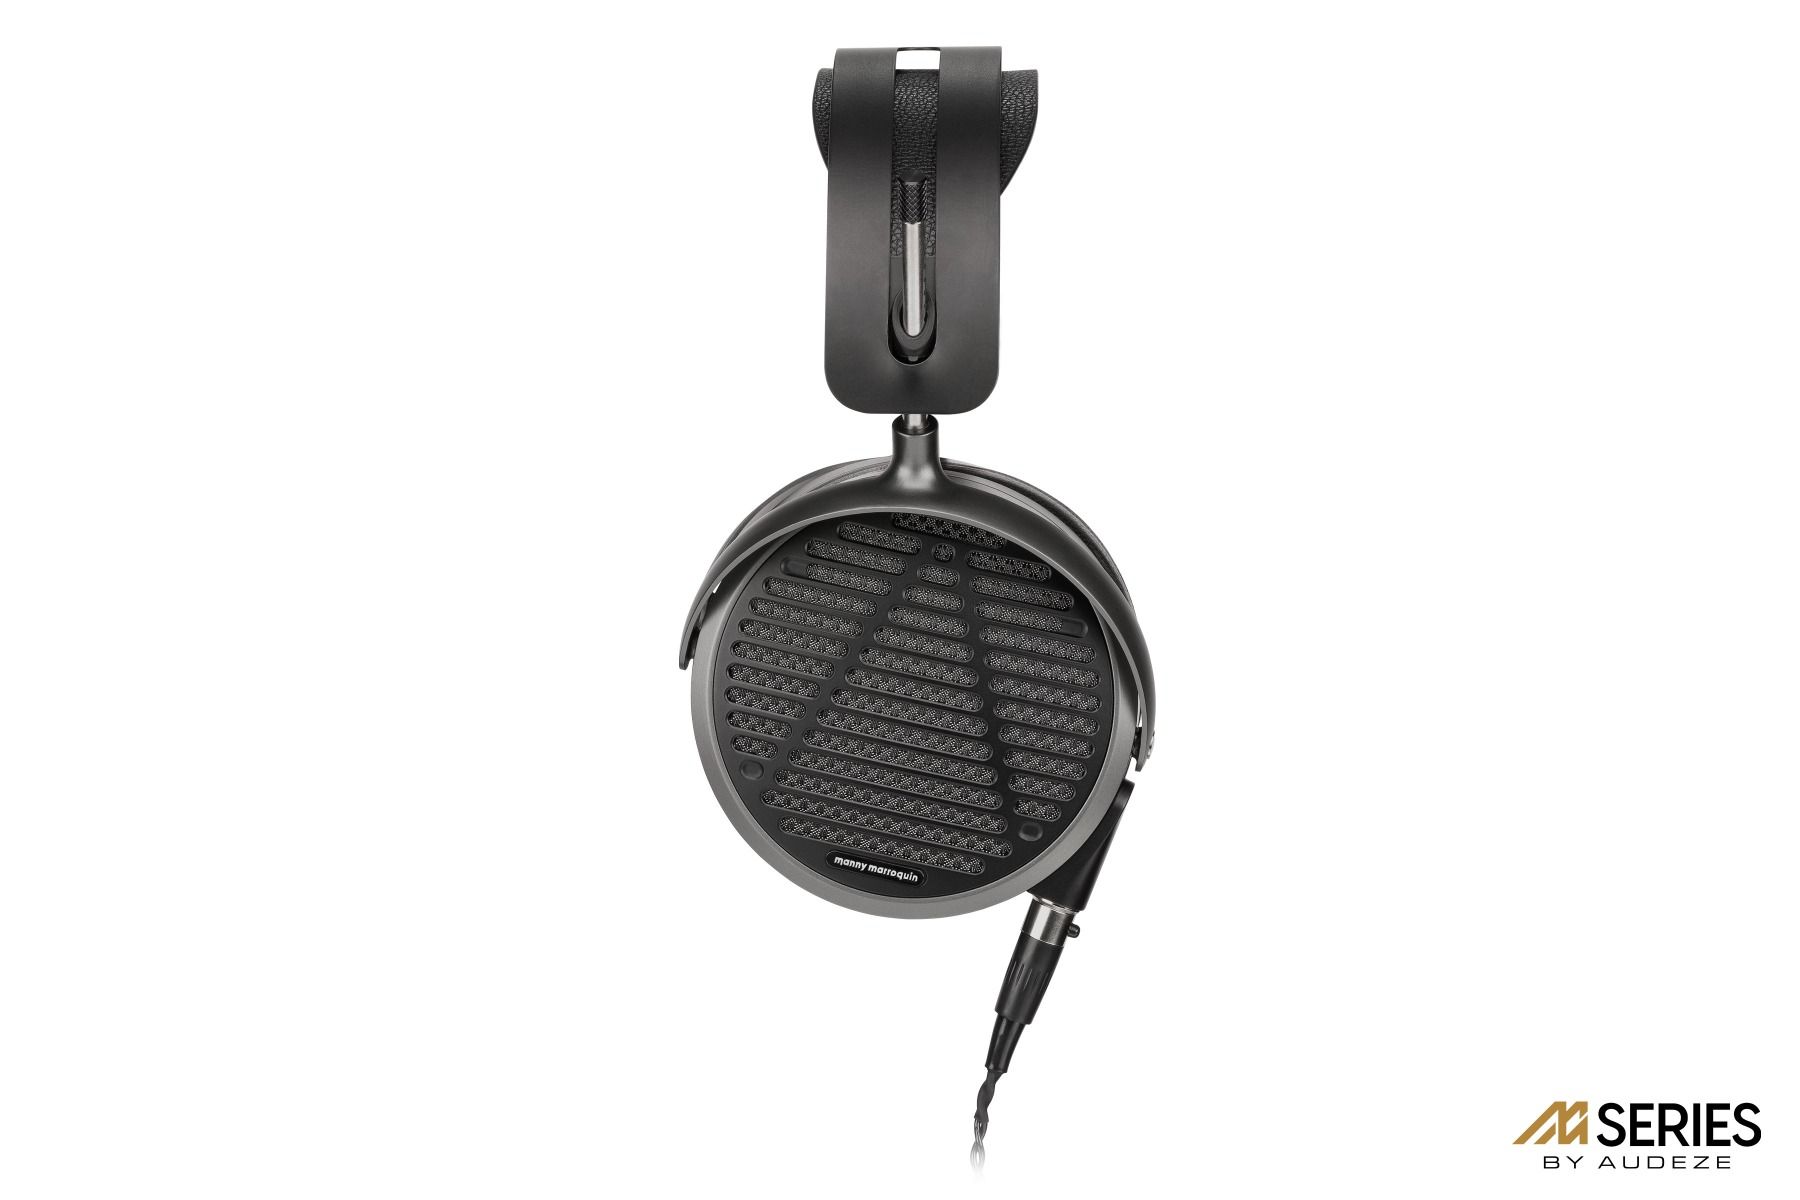 Side view of Audeze MM-500 Open-back Planar Magnetic Over-ear headphones in black color.